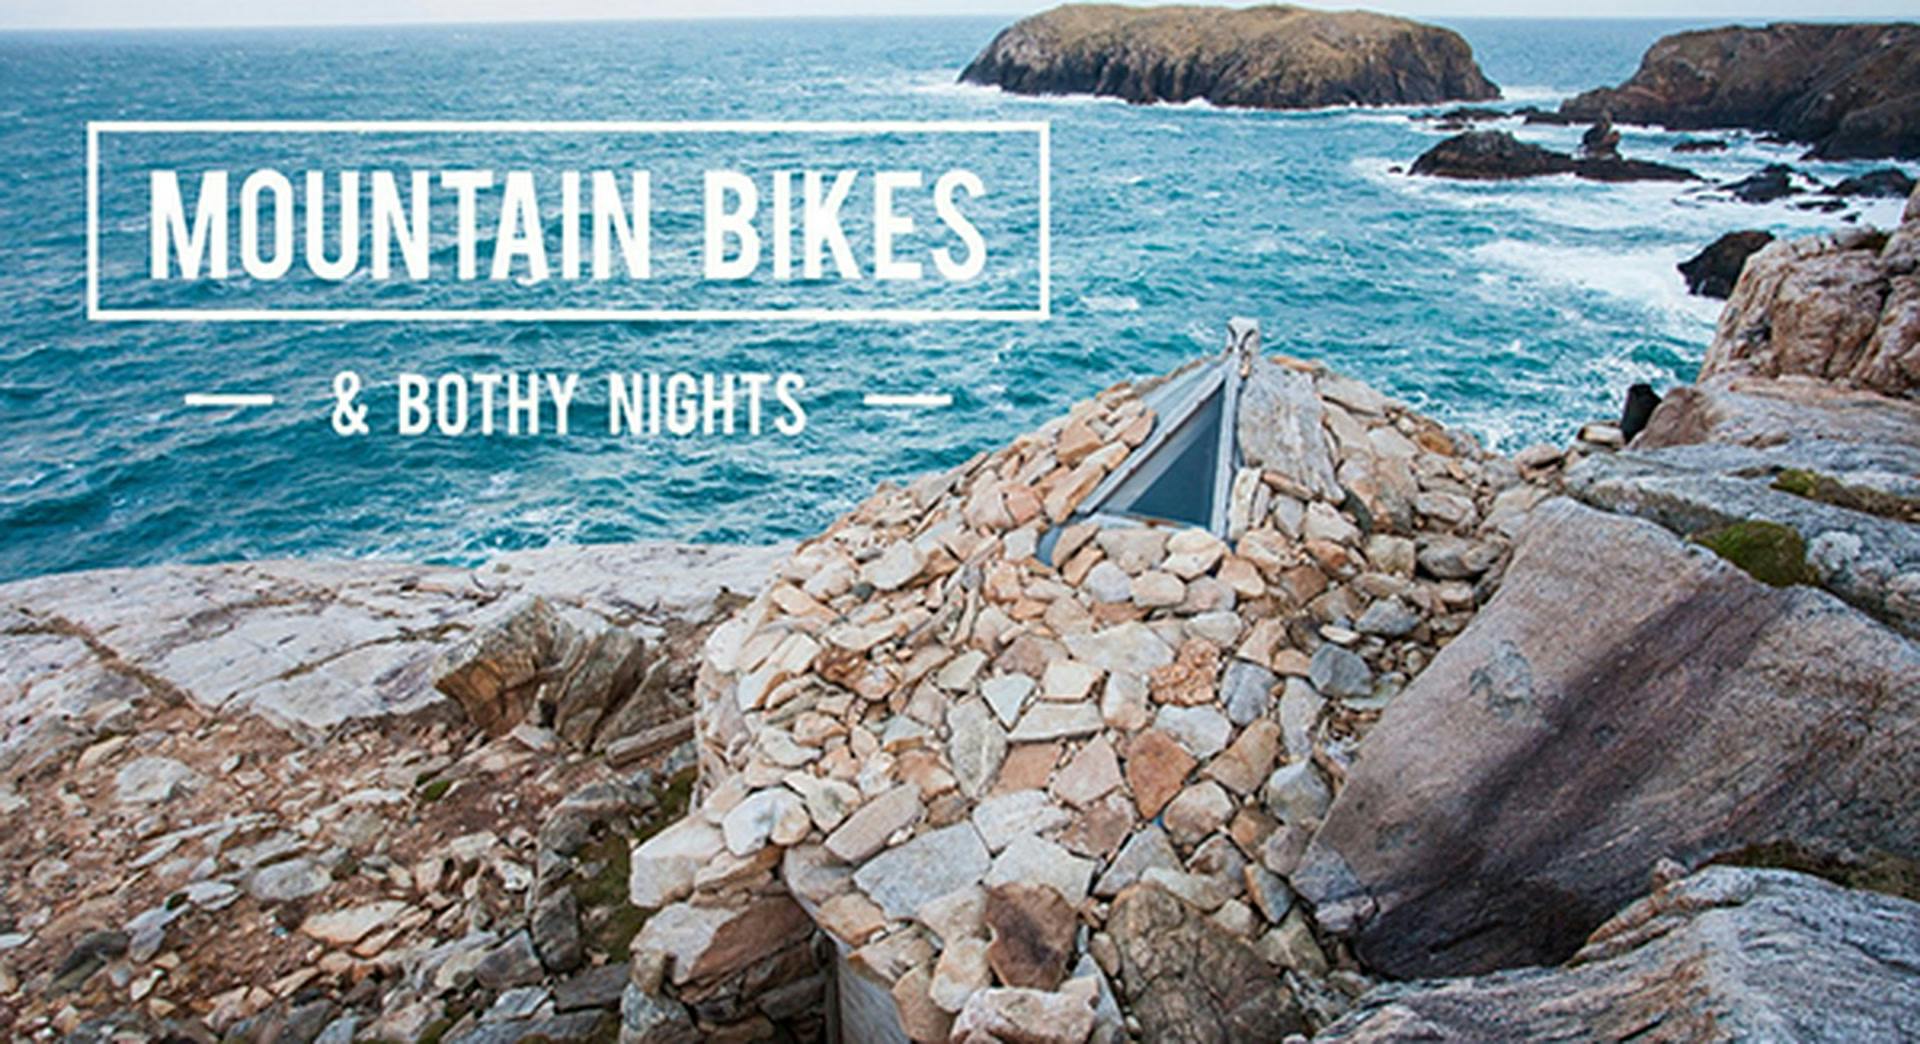 Mountain Bikes and Bothy Nights | Alastair Humphreys